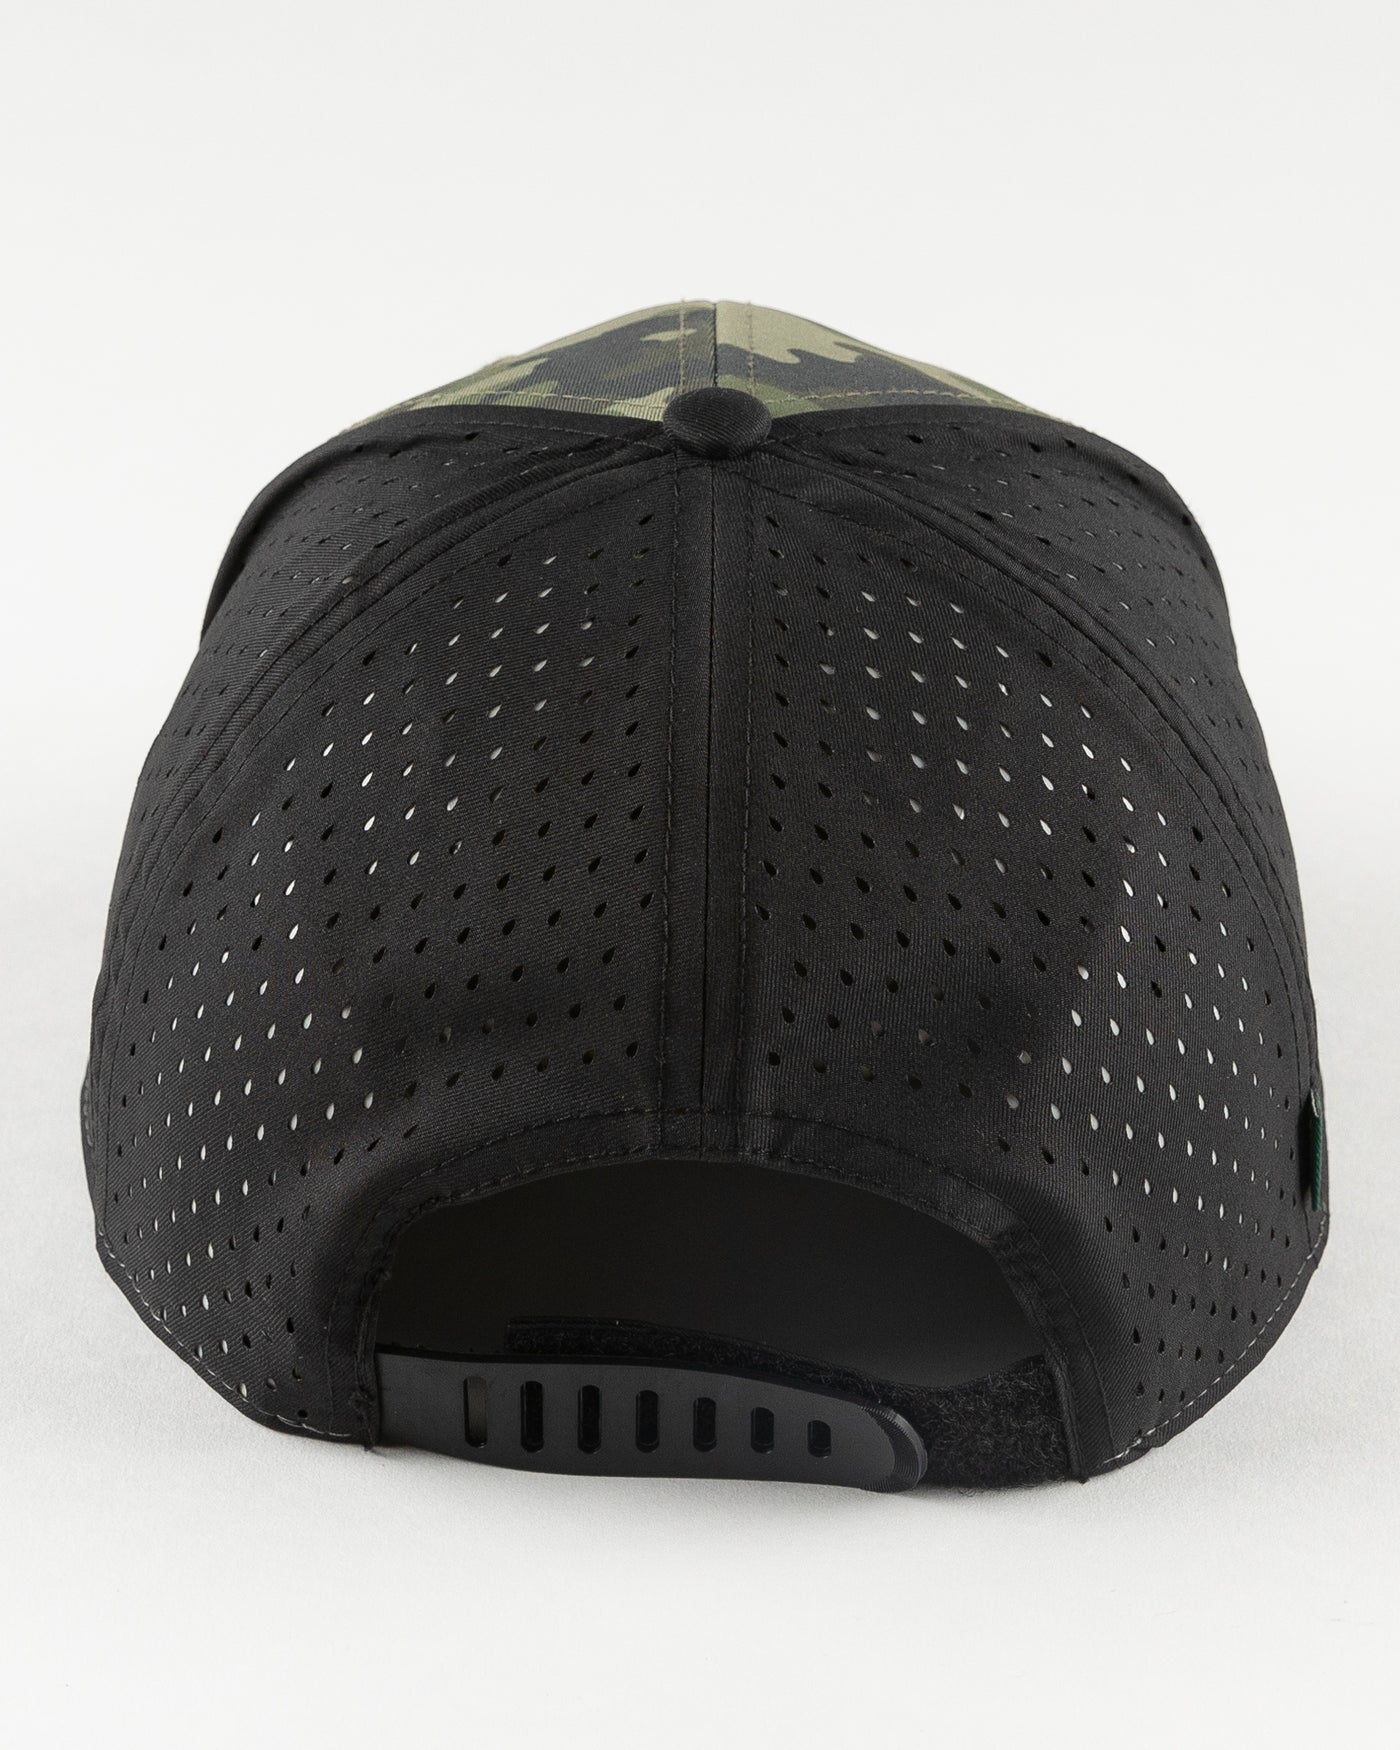 black and camo Rockford IceHogs adjustable cap - back lay flat